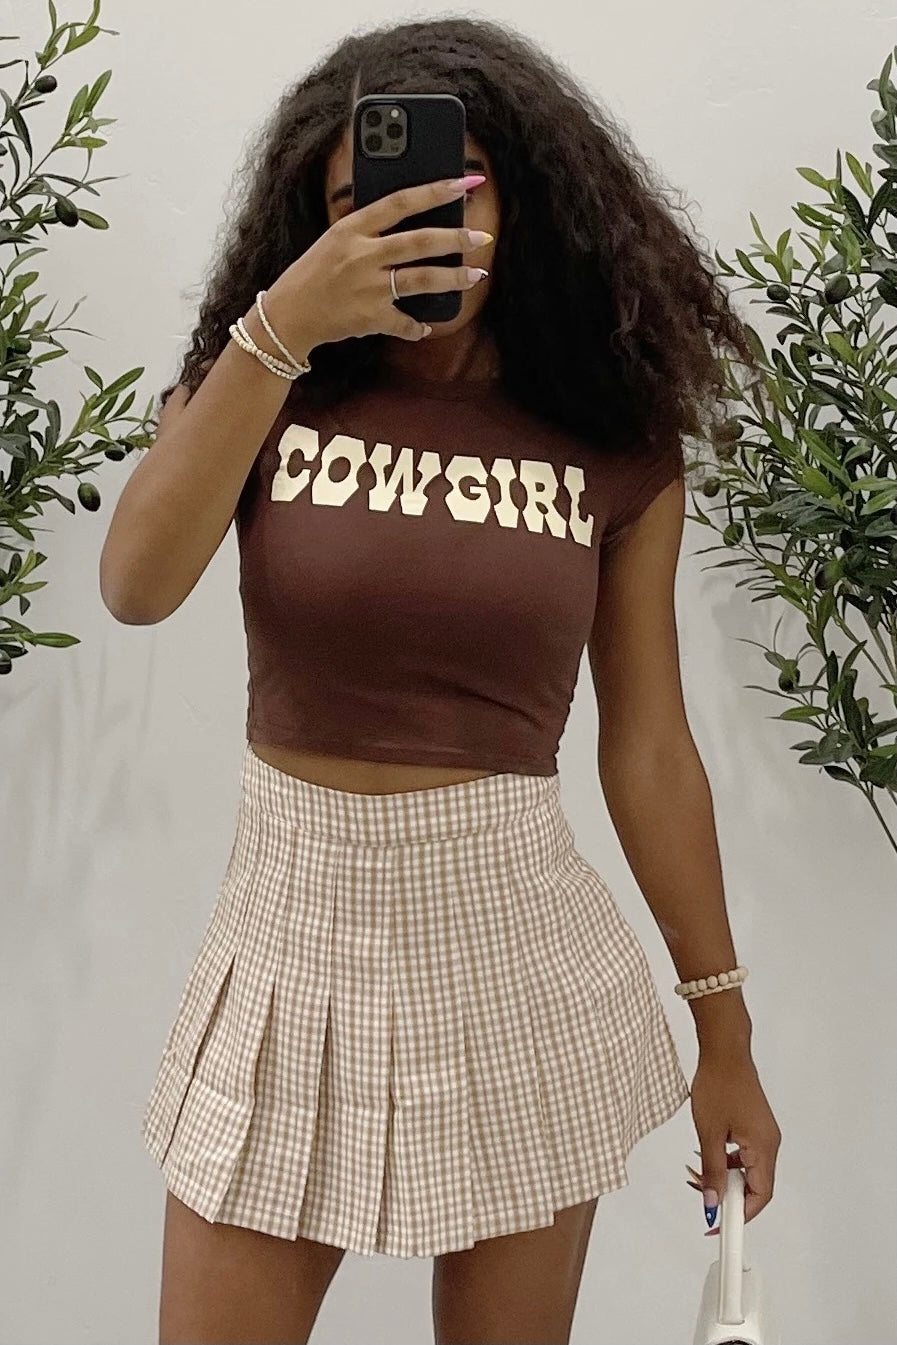 Cowgirl Shirt (Chocolate Brown)